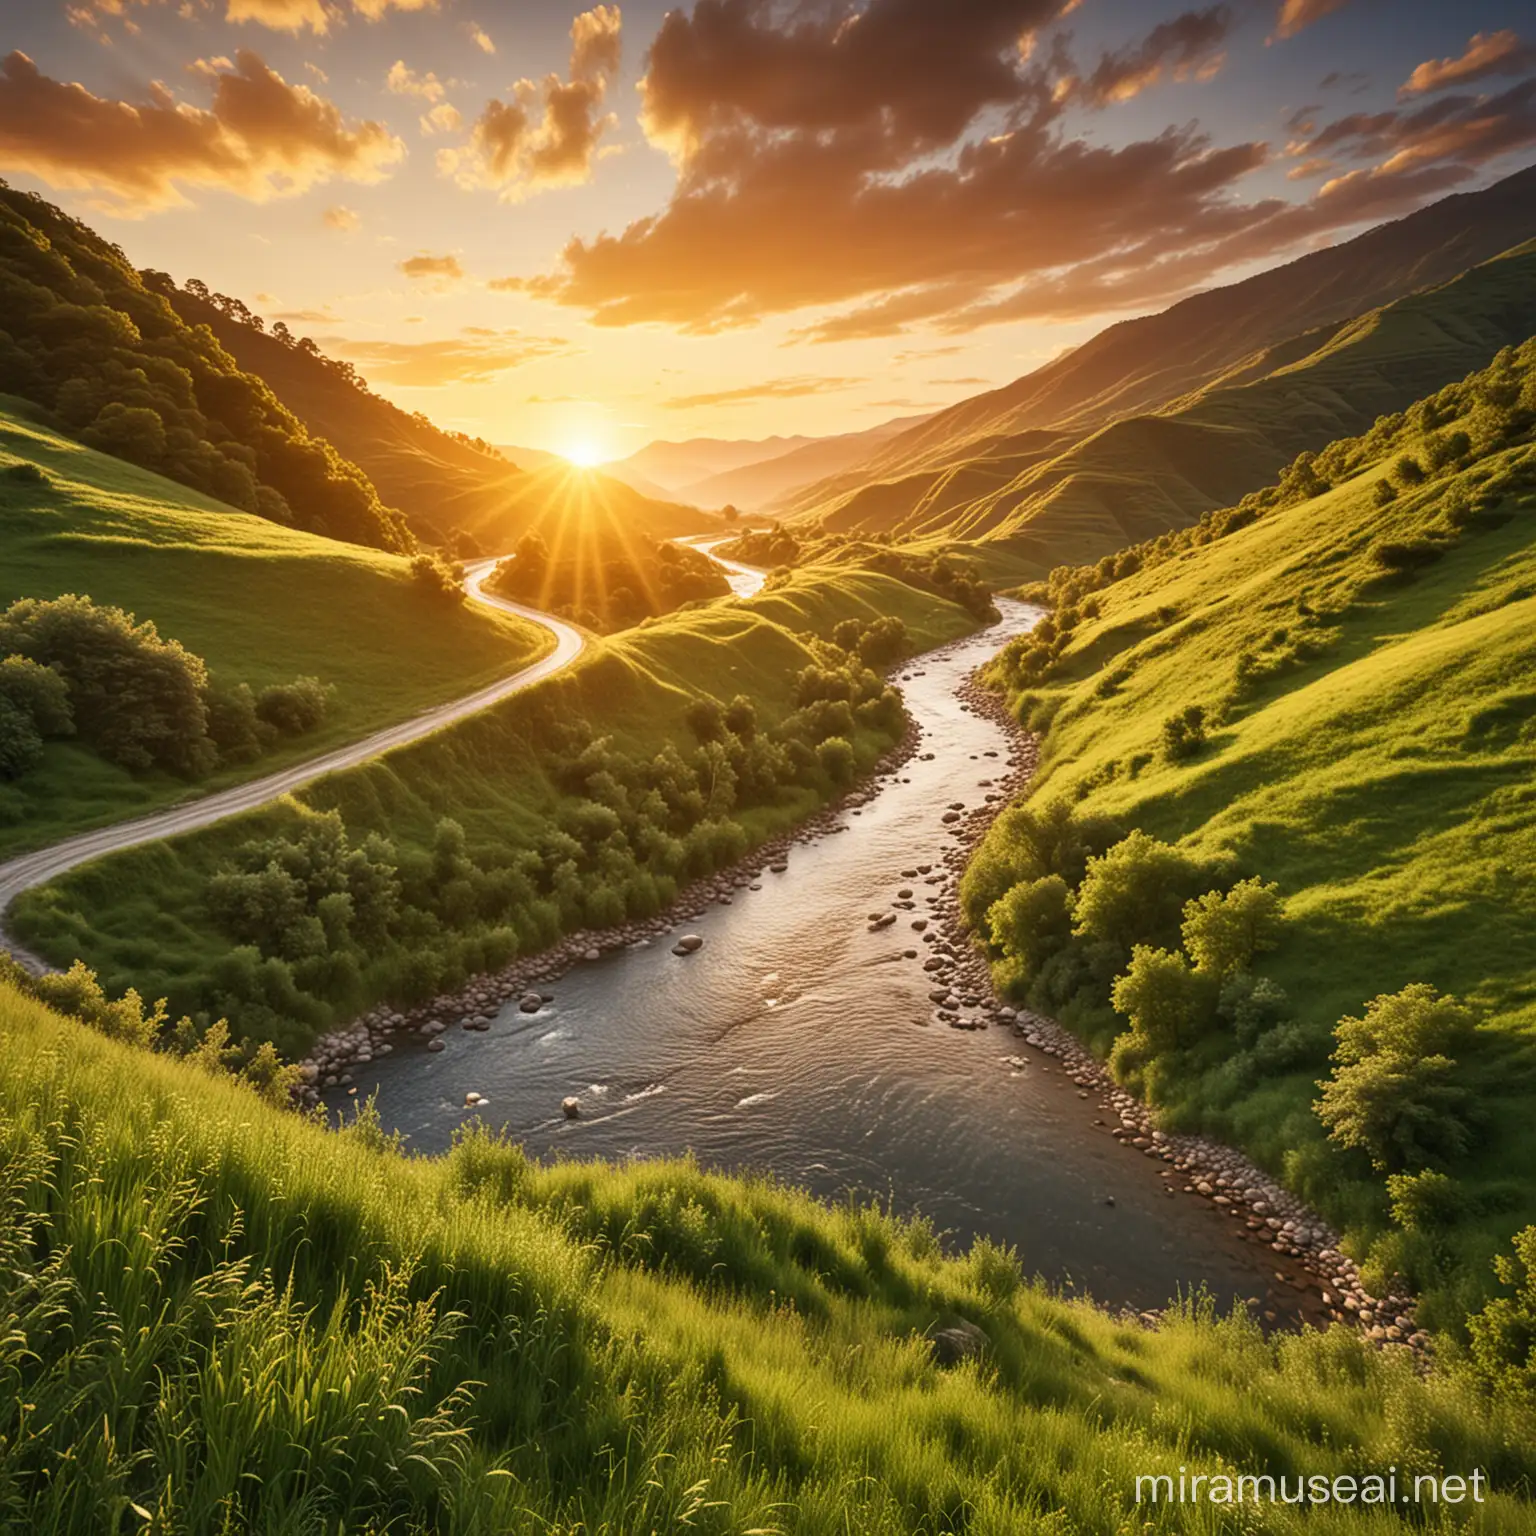 serene landscape with a winding river flowing through lush green hills under a golden sunset